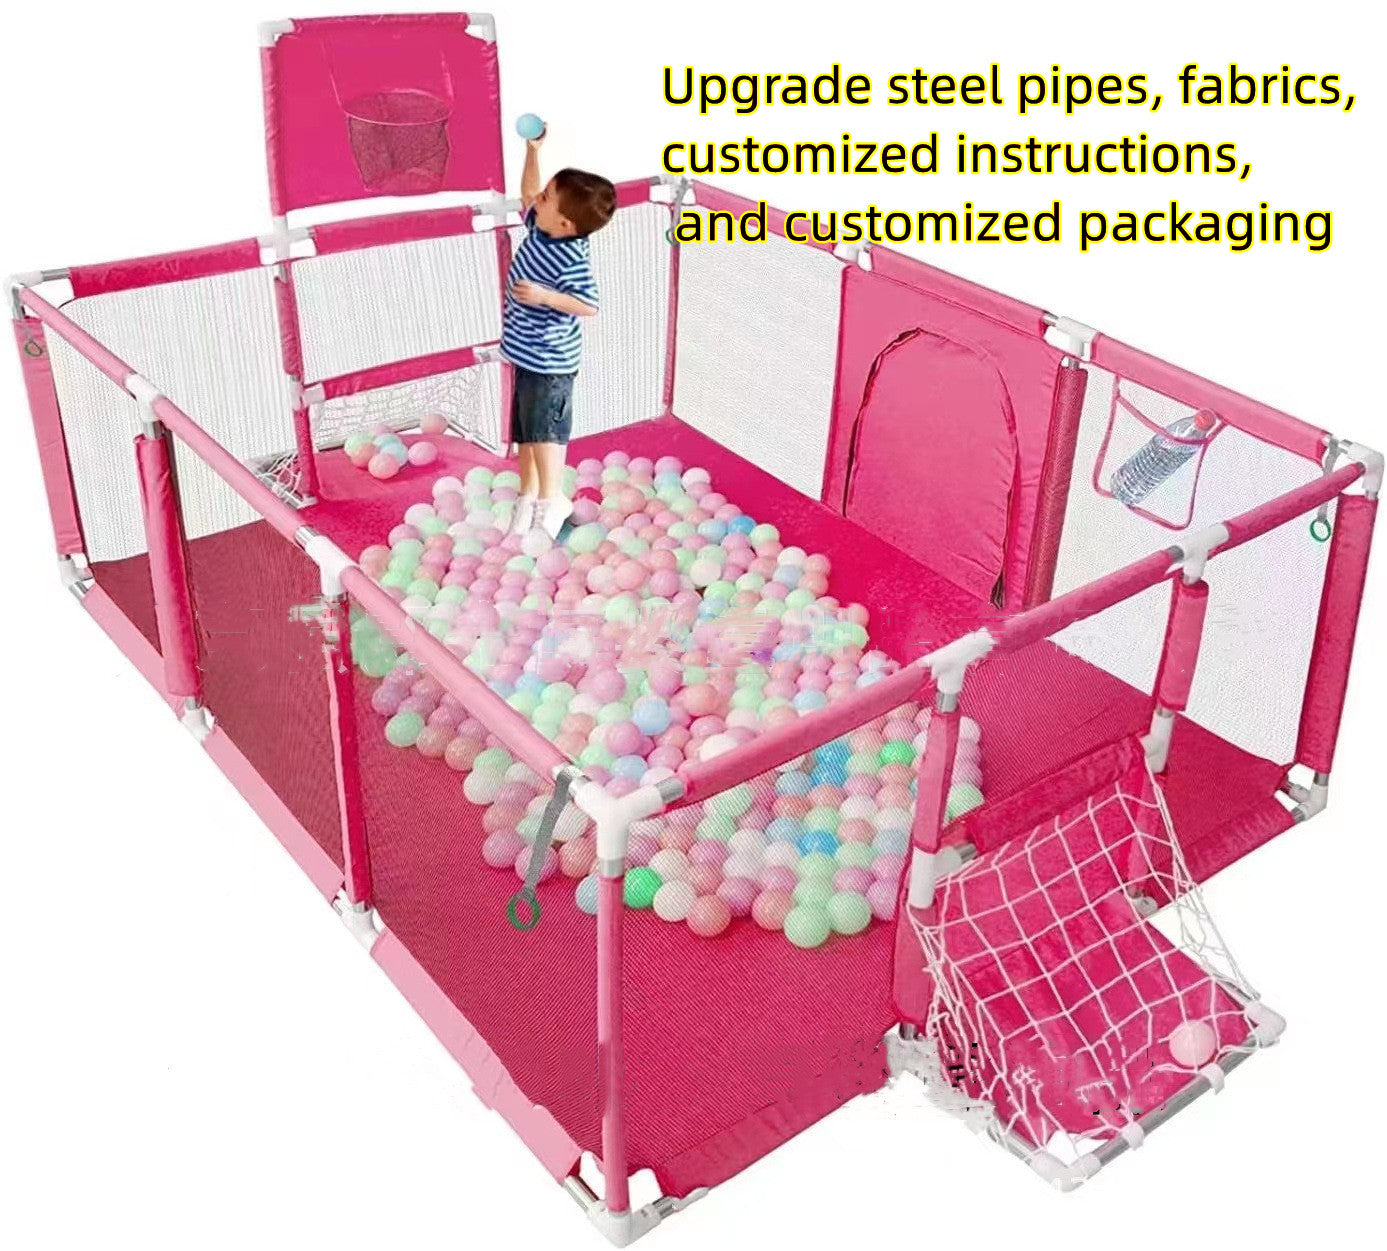 New Playpen Children's Tent Baby Products